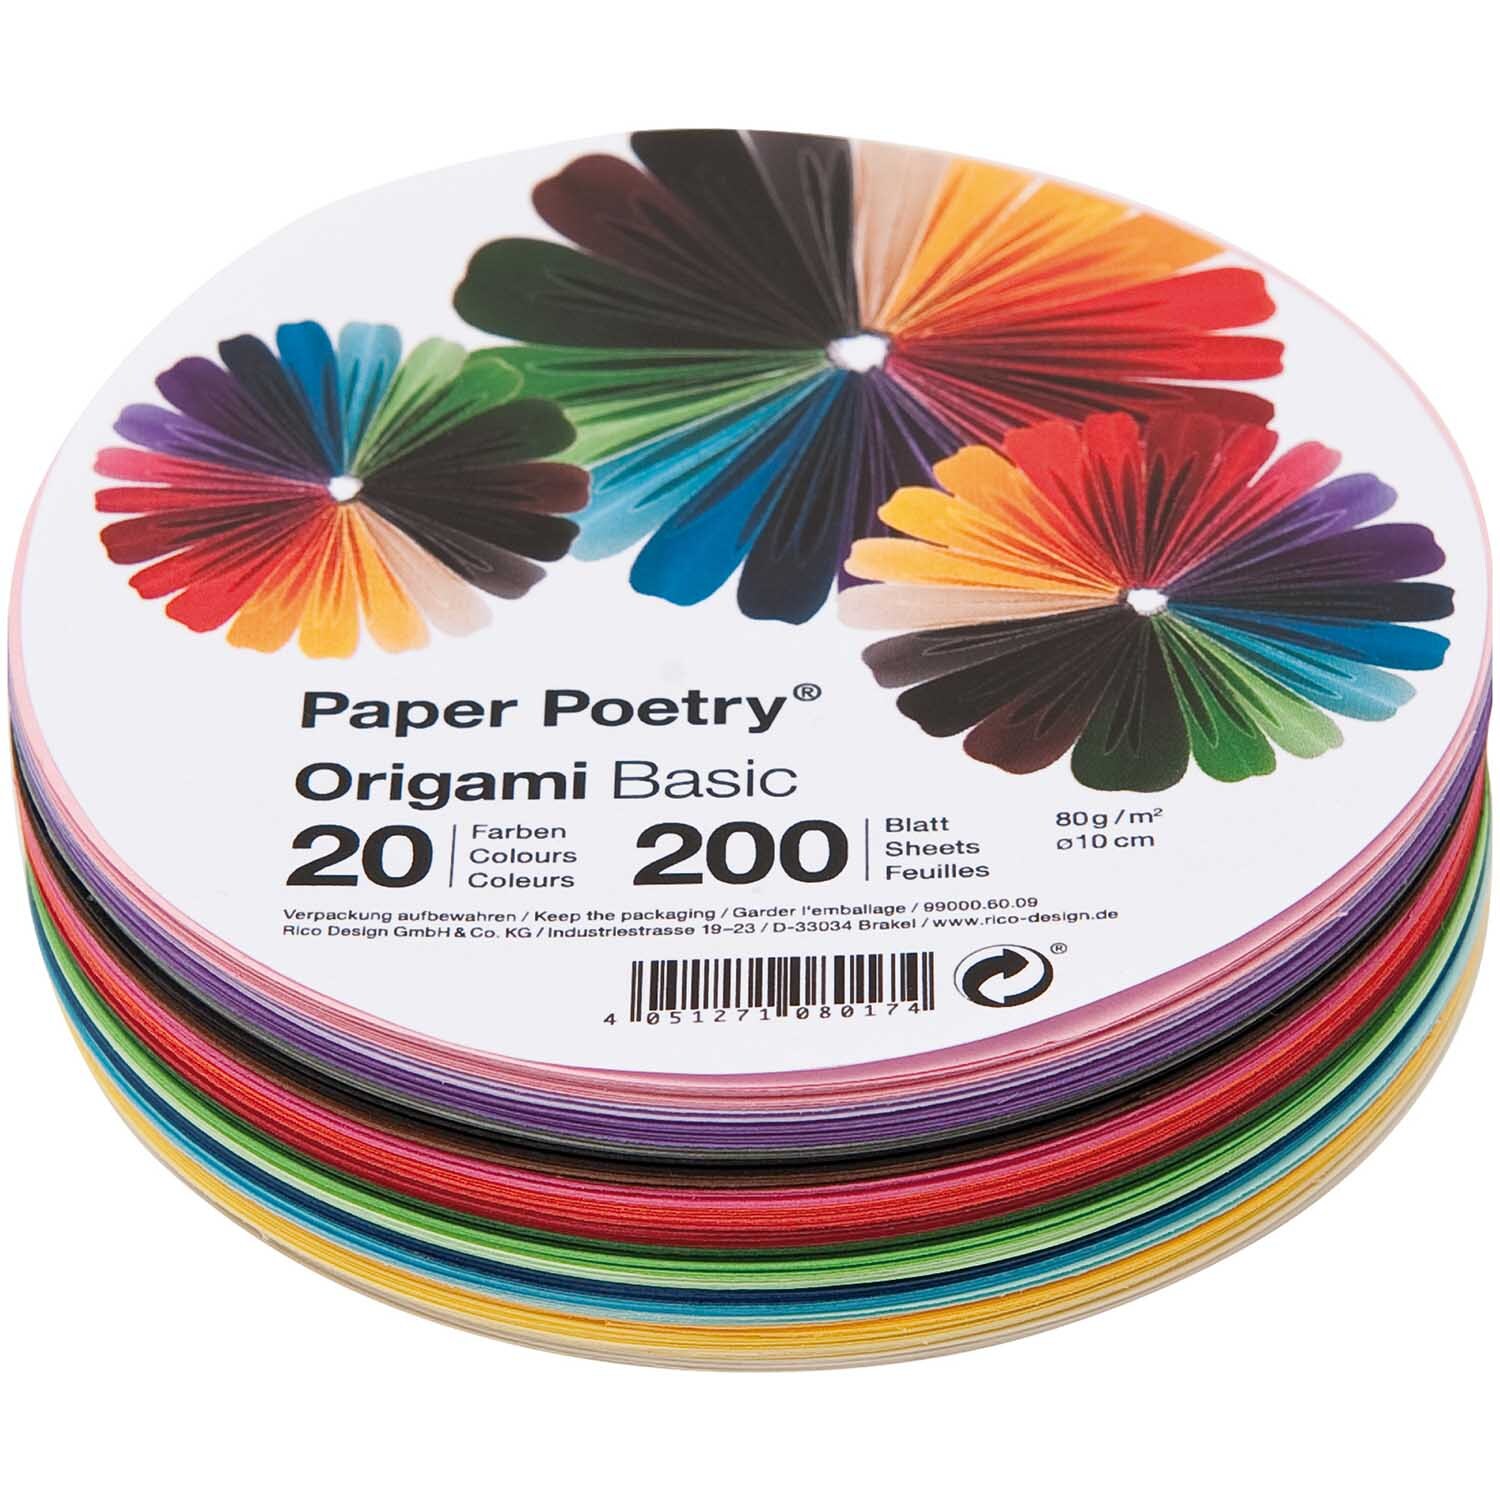 Paper Poetry Origami basic rund 10cm 200 Blatt 20 Farben